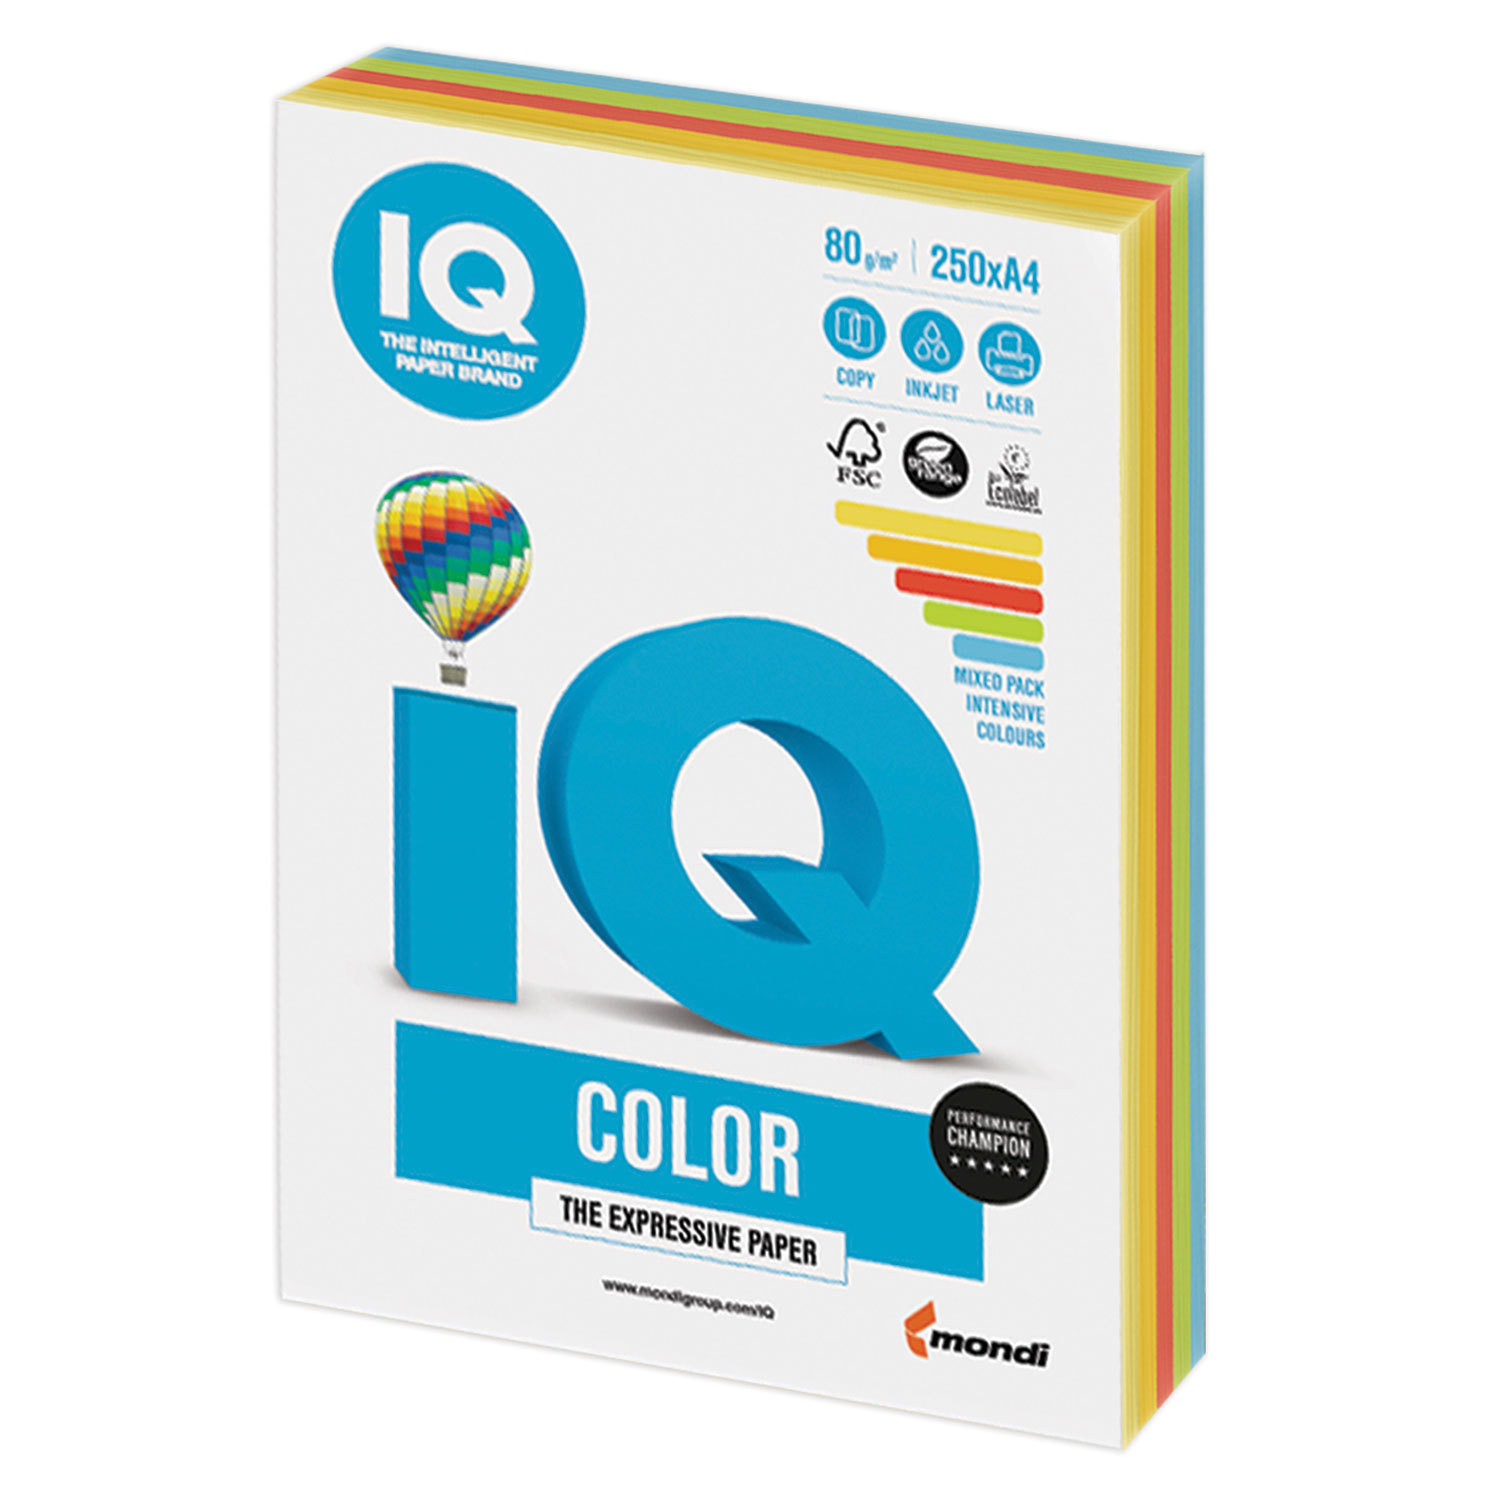   IQ color, 4, 80 /2, 250 ., (5  x 50 ),  , RB02